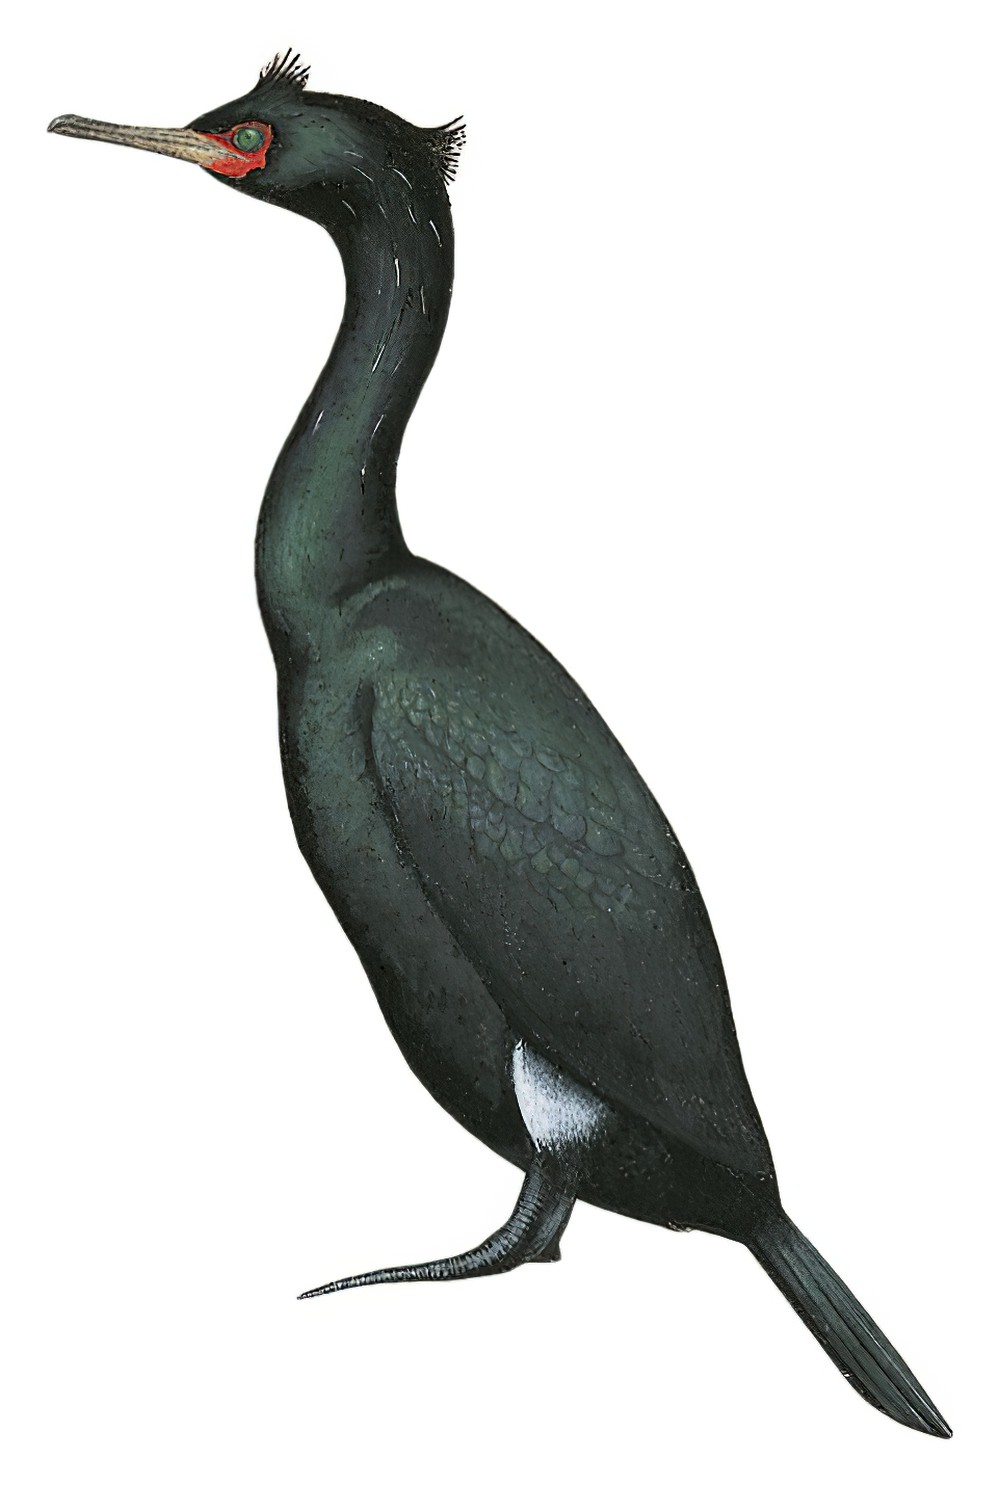 Pelagic Cormorant / Phalacrocorax pelagicus